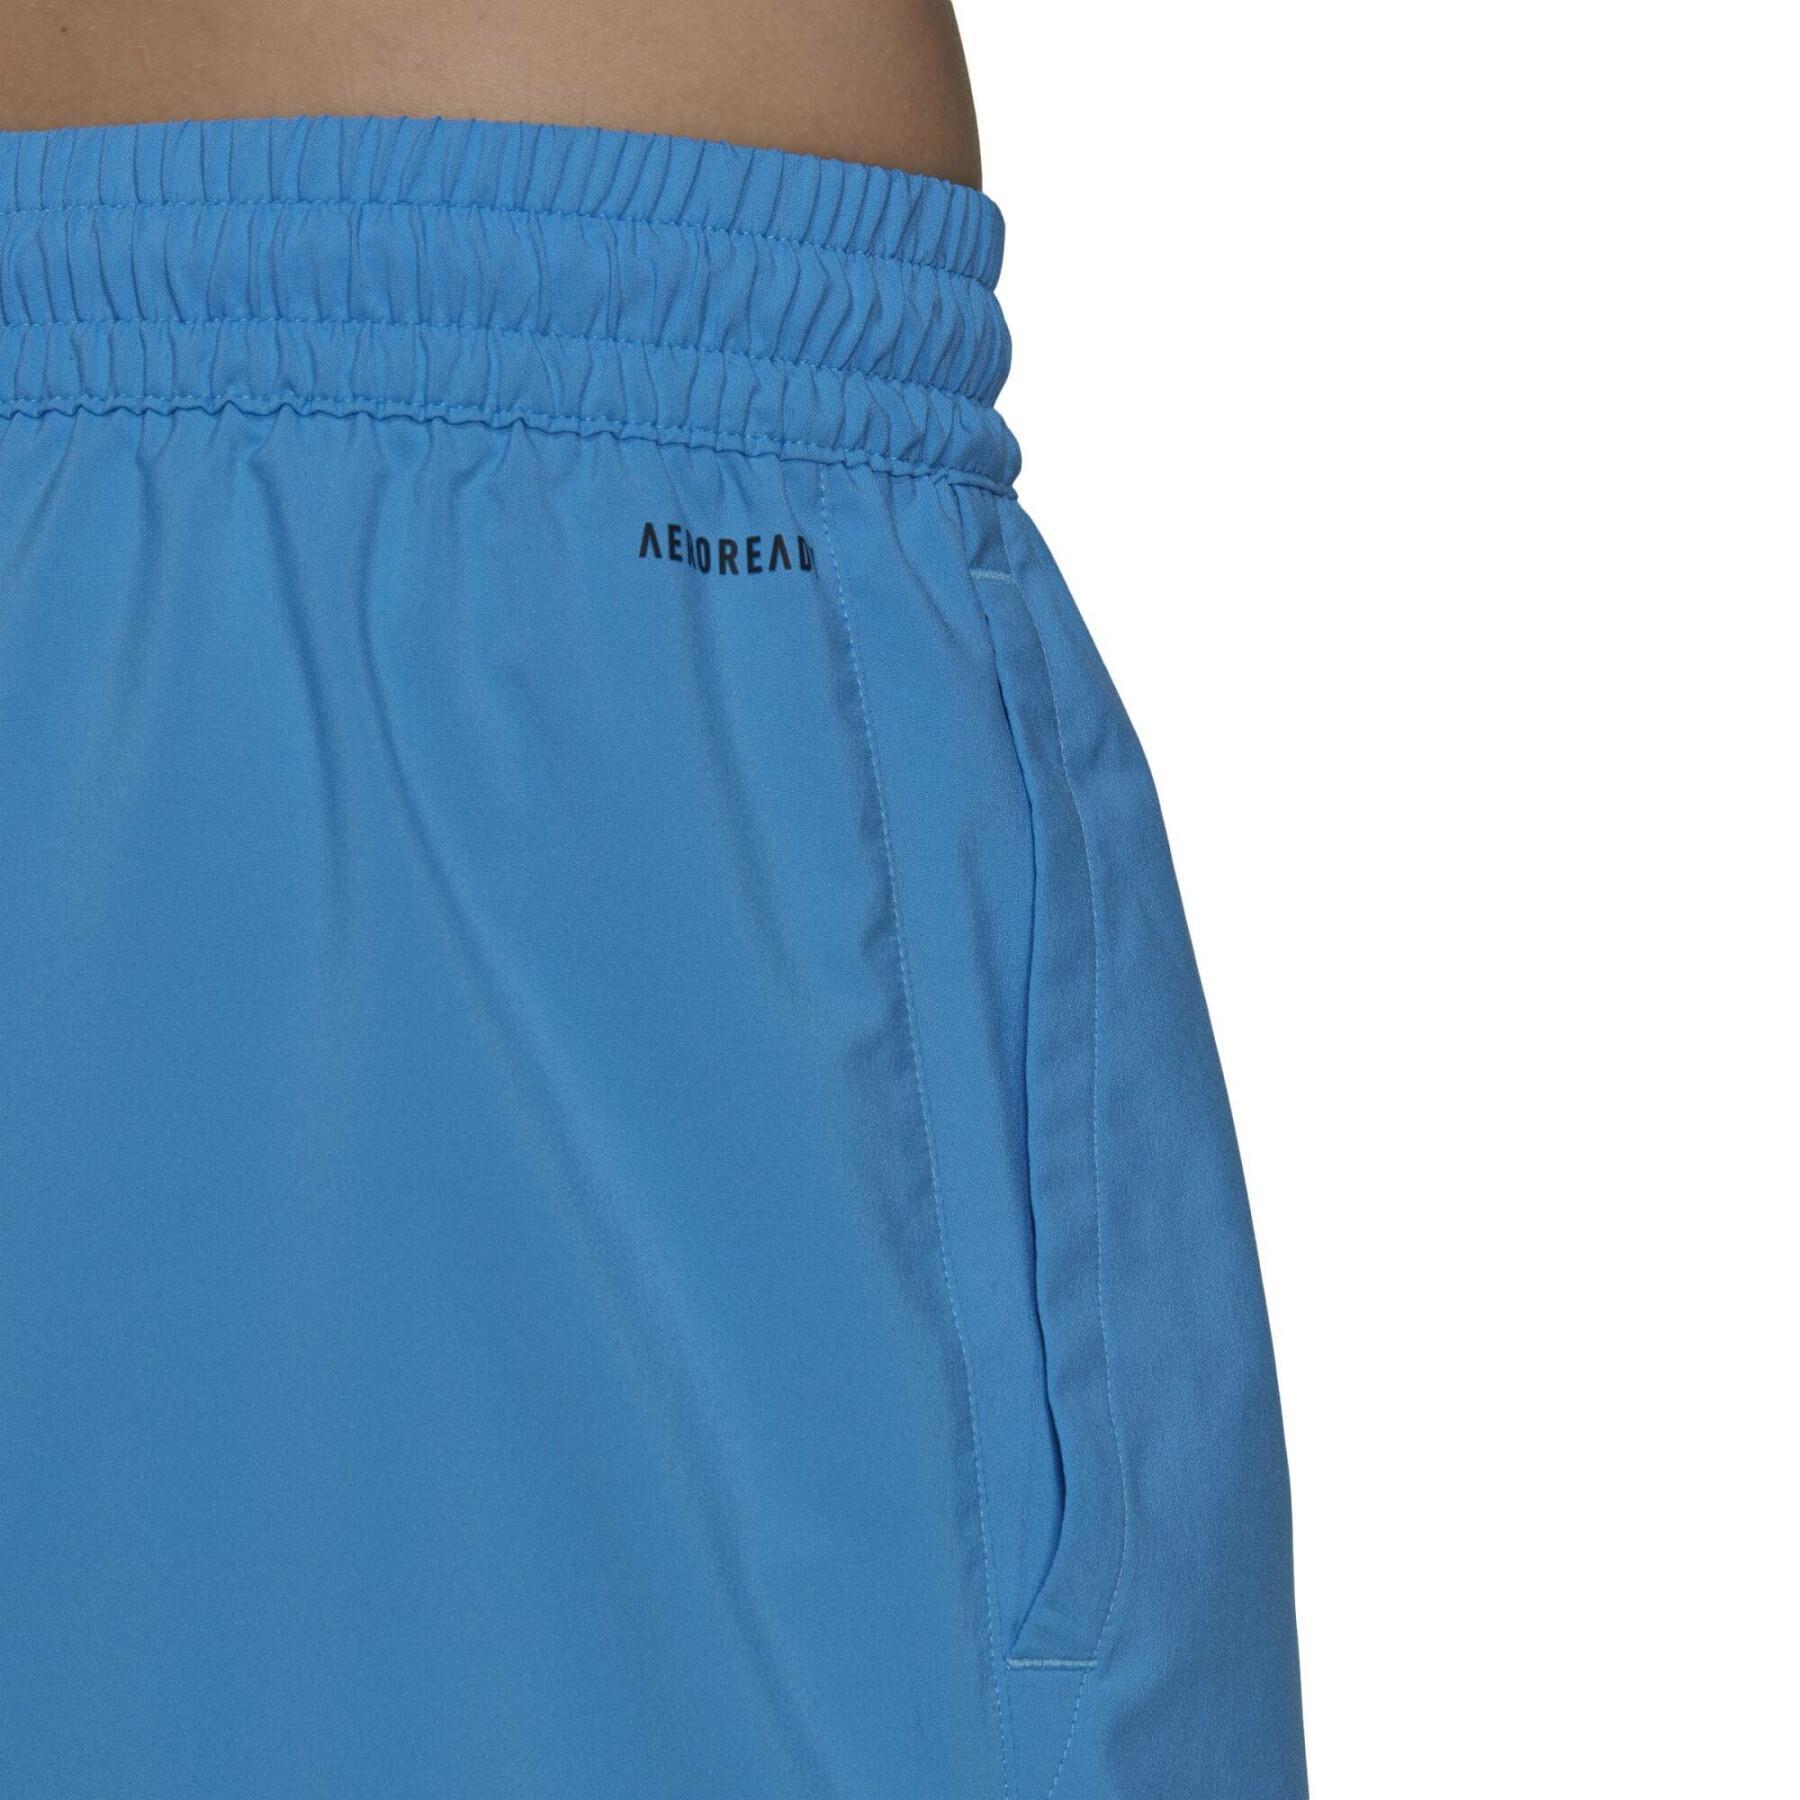 Tennis club shorts with 3 stripes adidas